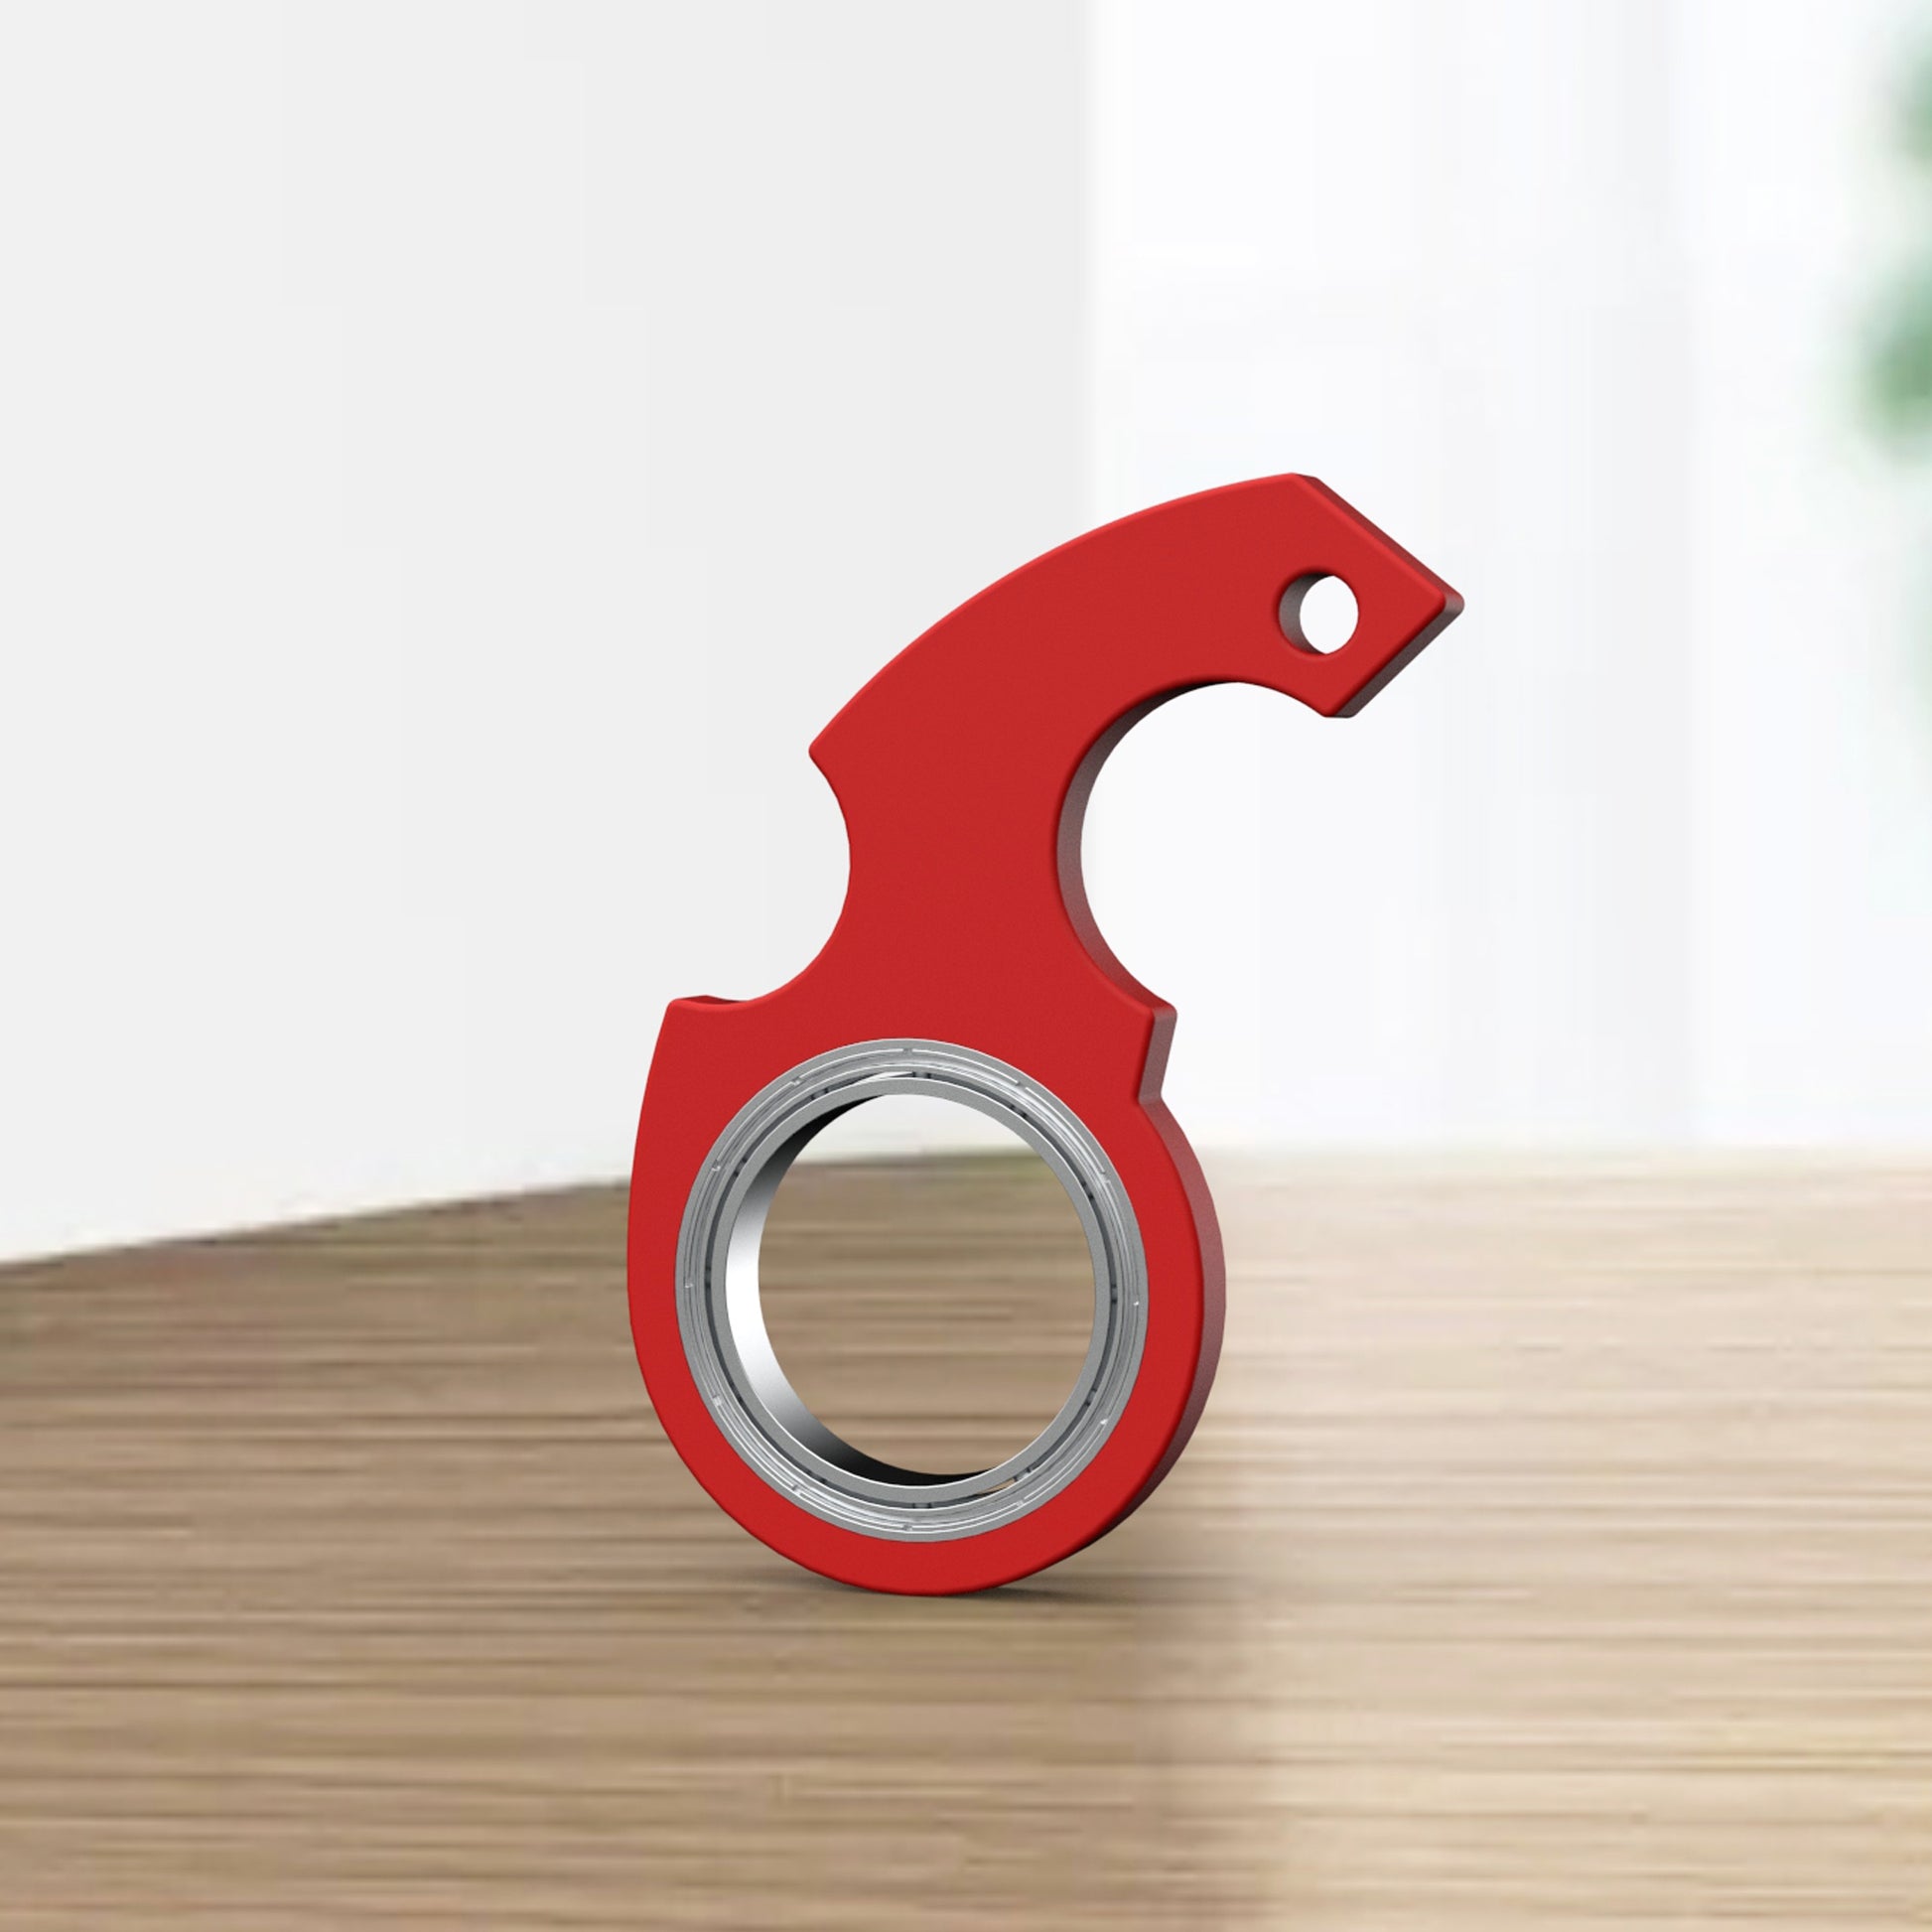 Creative Fidget Spinner Keychain Toy - Anti-Anxiety Stress Relief, Finger Spinner, Bottle Opener, Kids' Toy